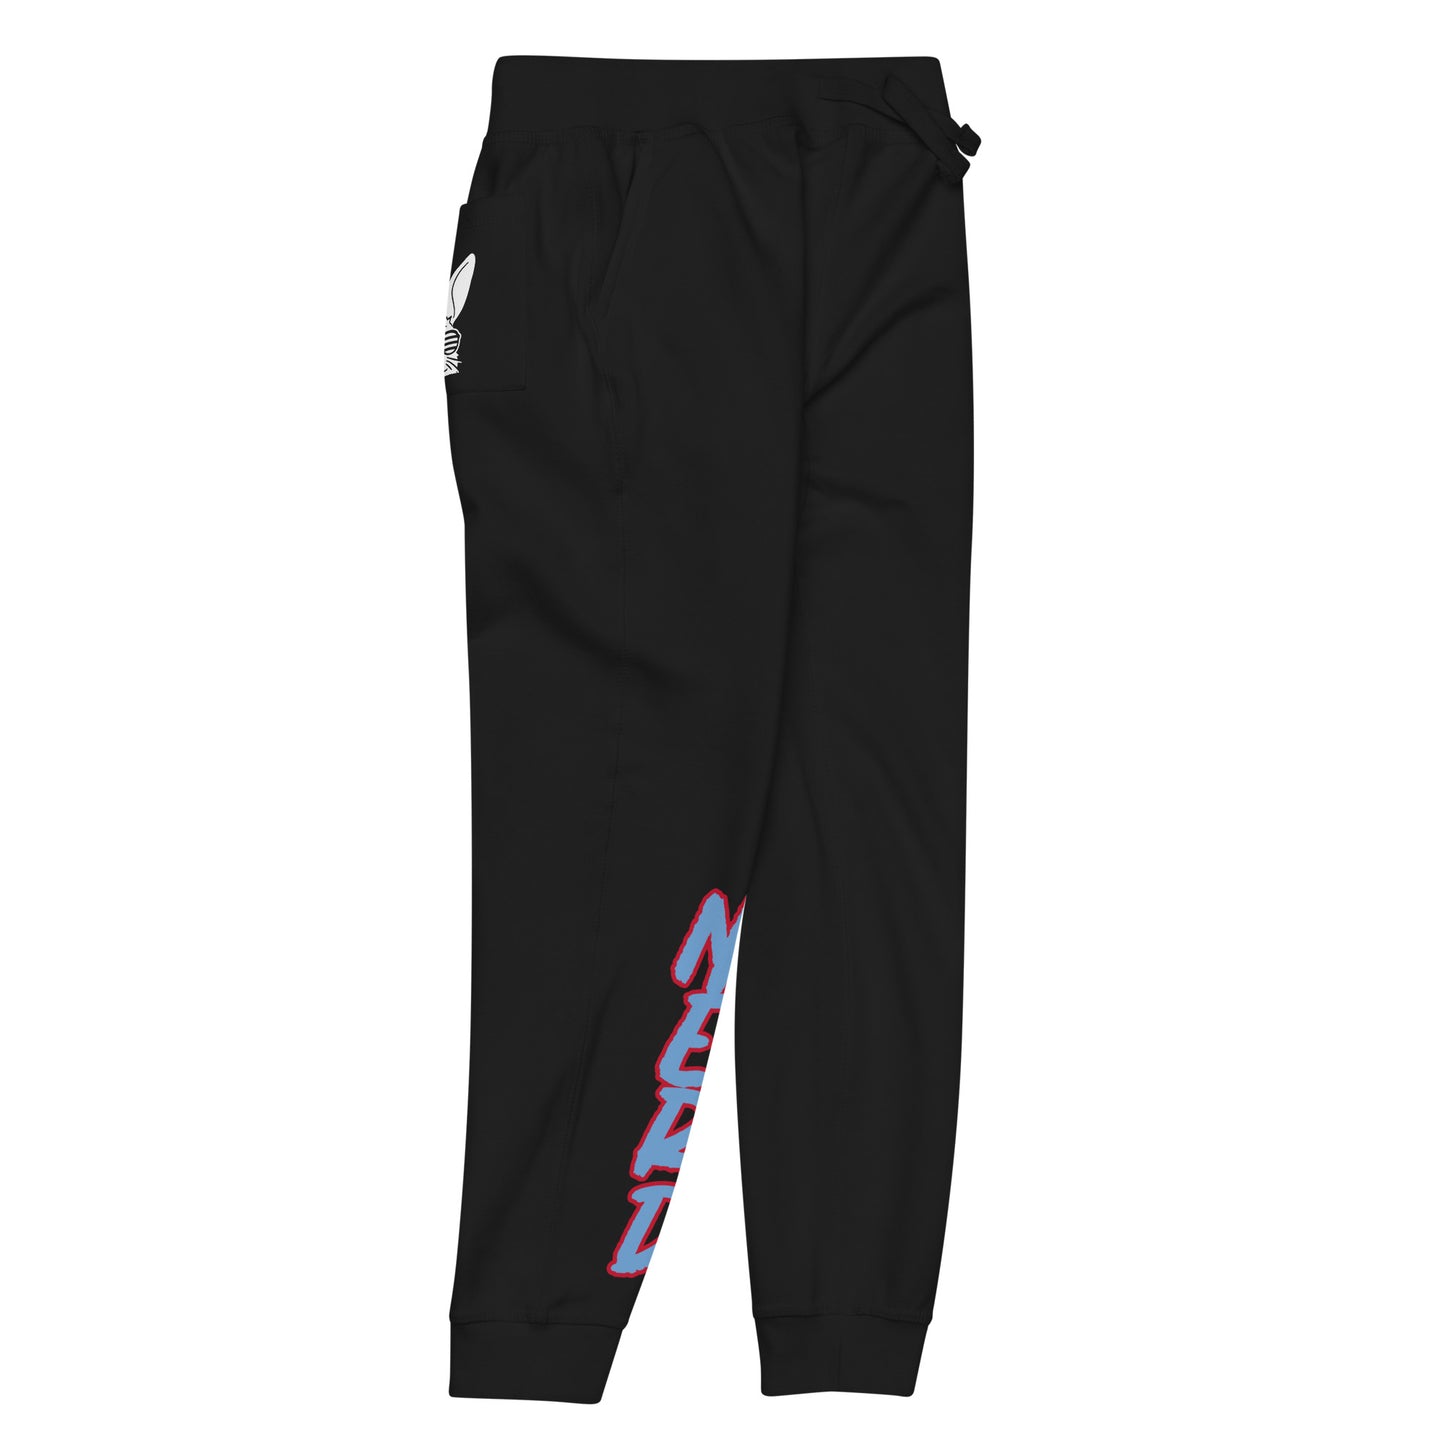 Unisex fleece sweatpants (Nerd Style)